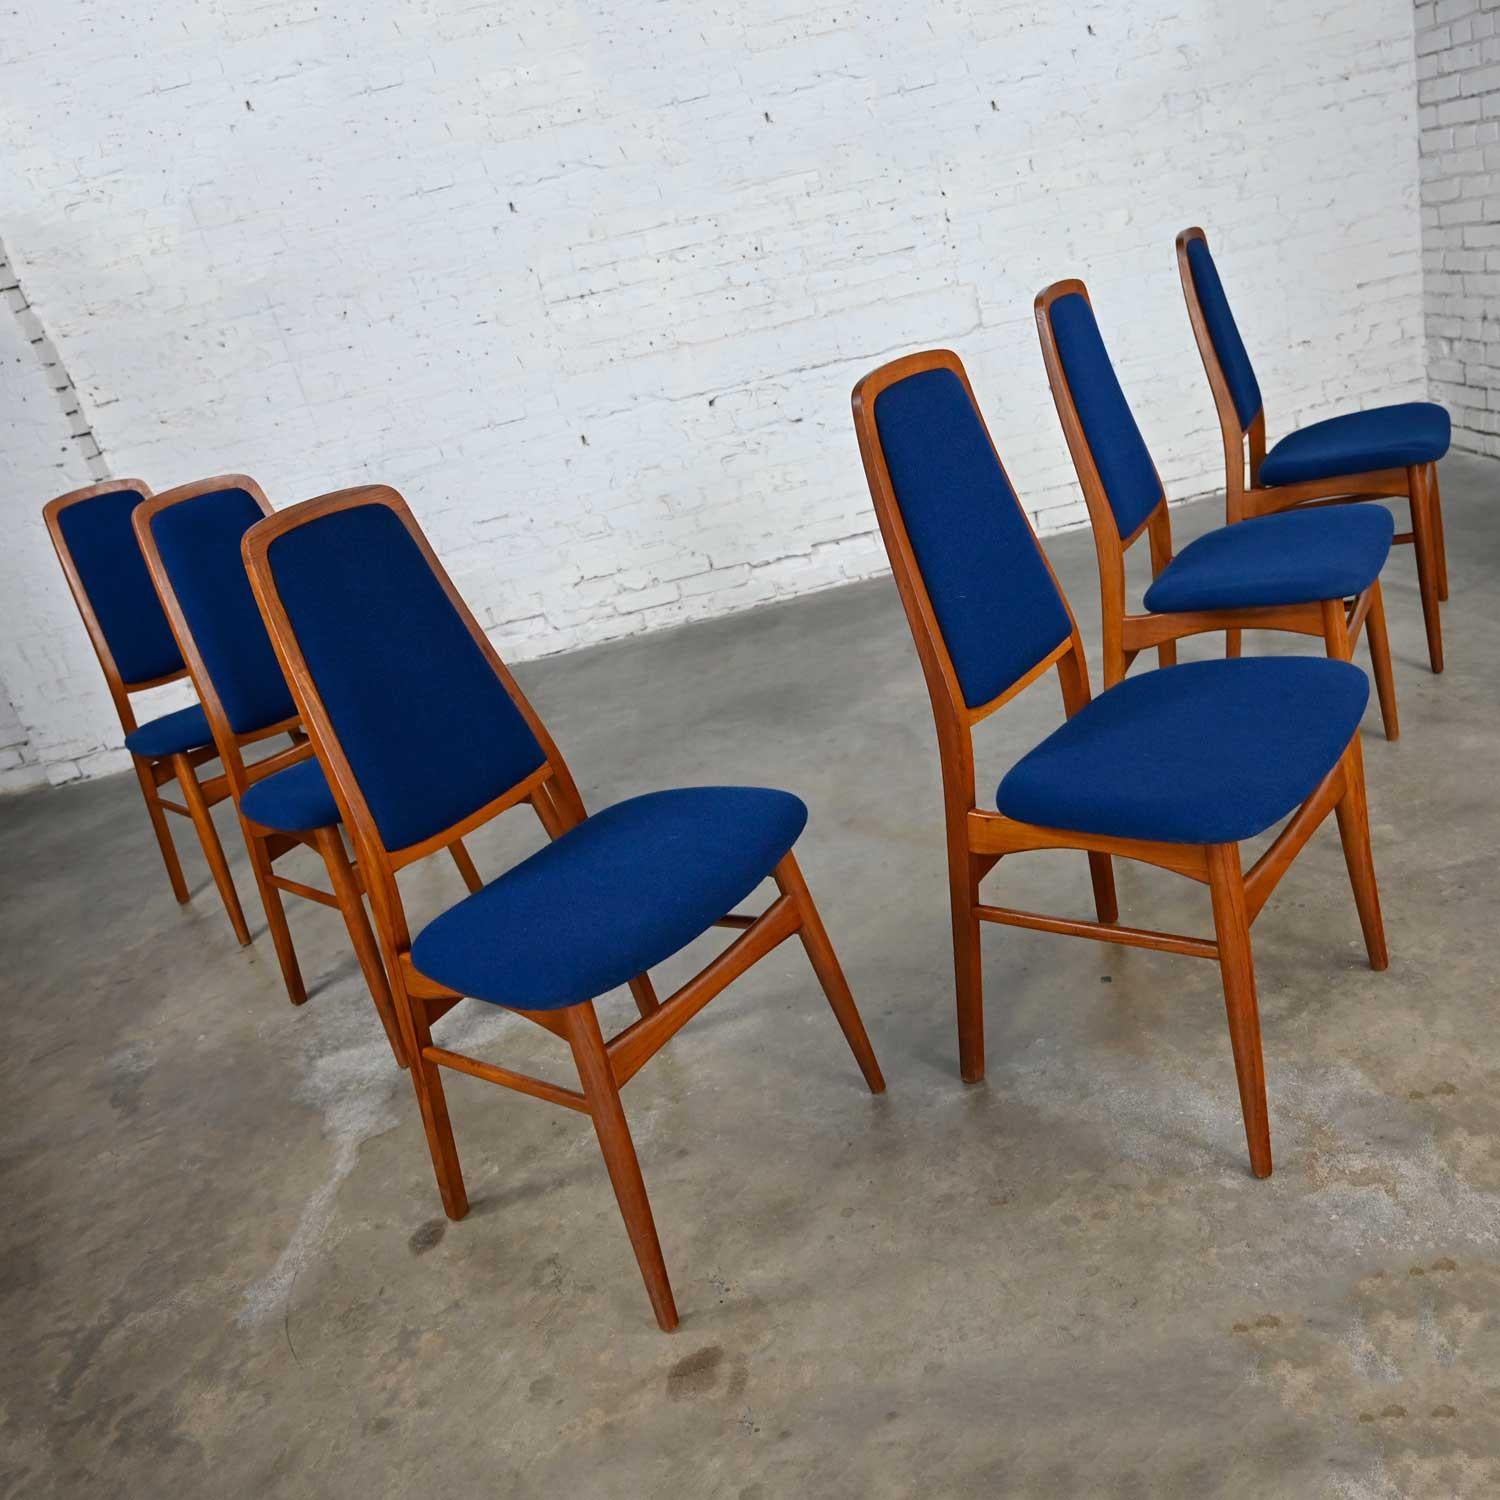 6 Vamdrup Stolefabrik Scandinavian Modern Teak Blue Dining Chairs Style Eva Chai 1